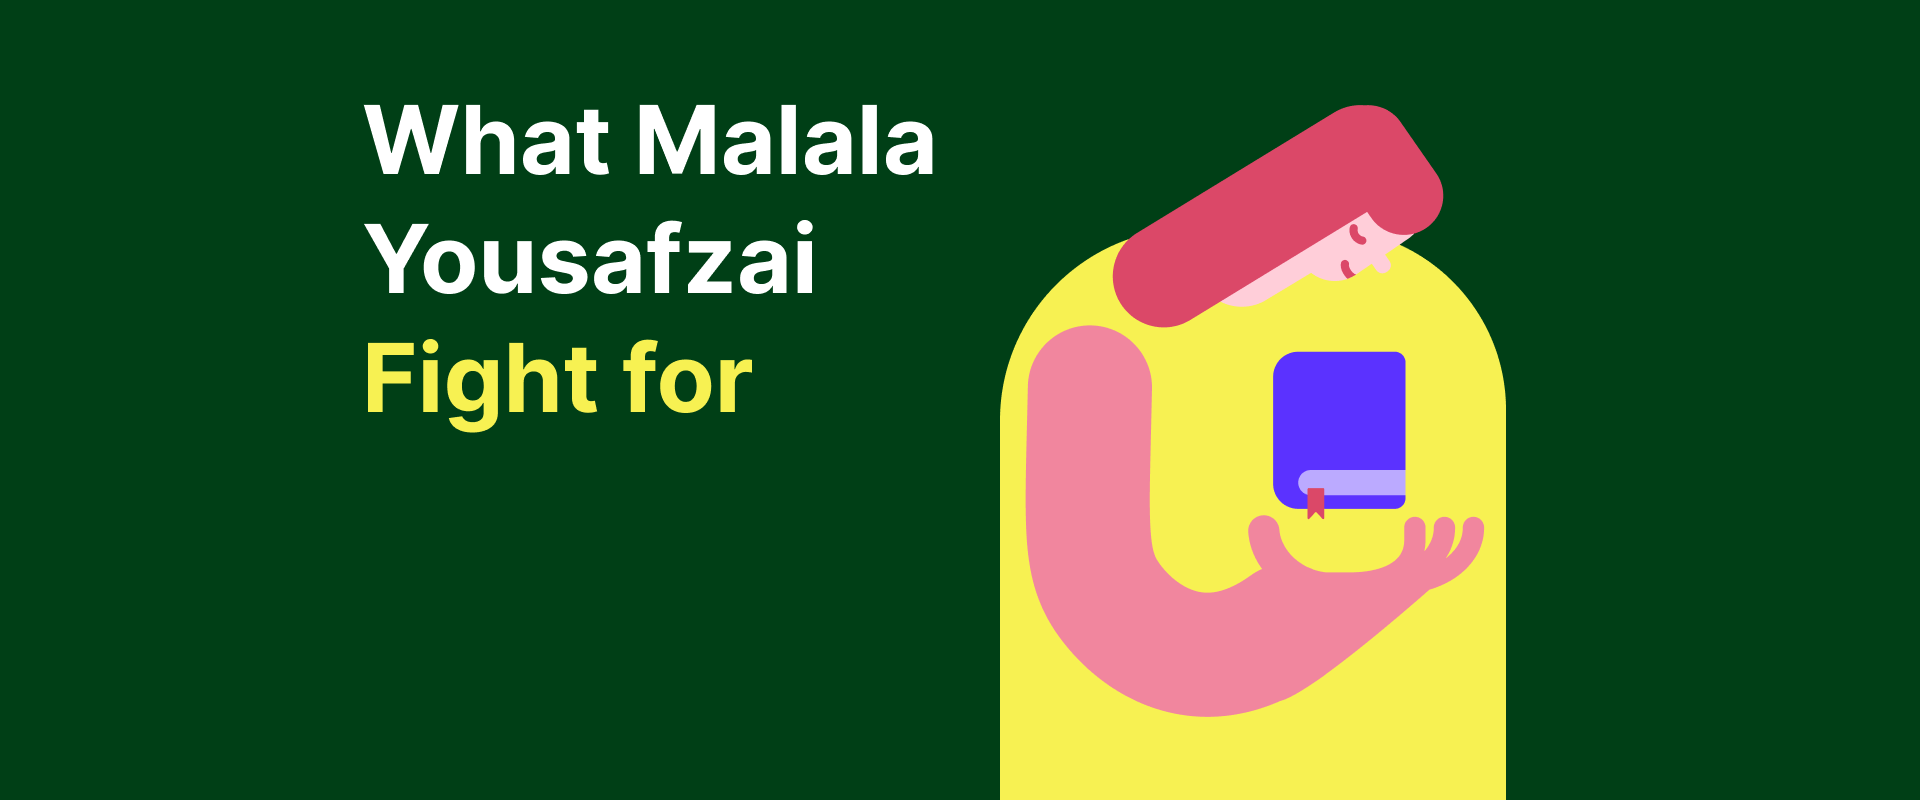 What Malala Yousafzai fight for